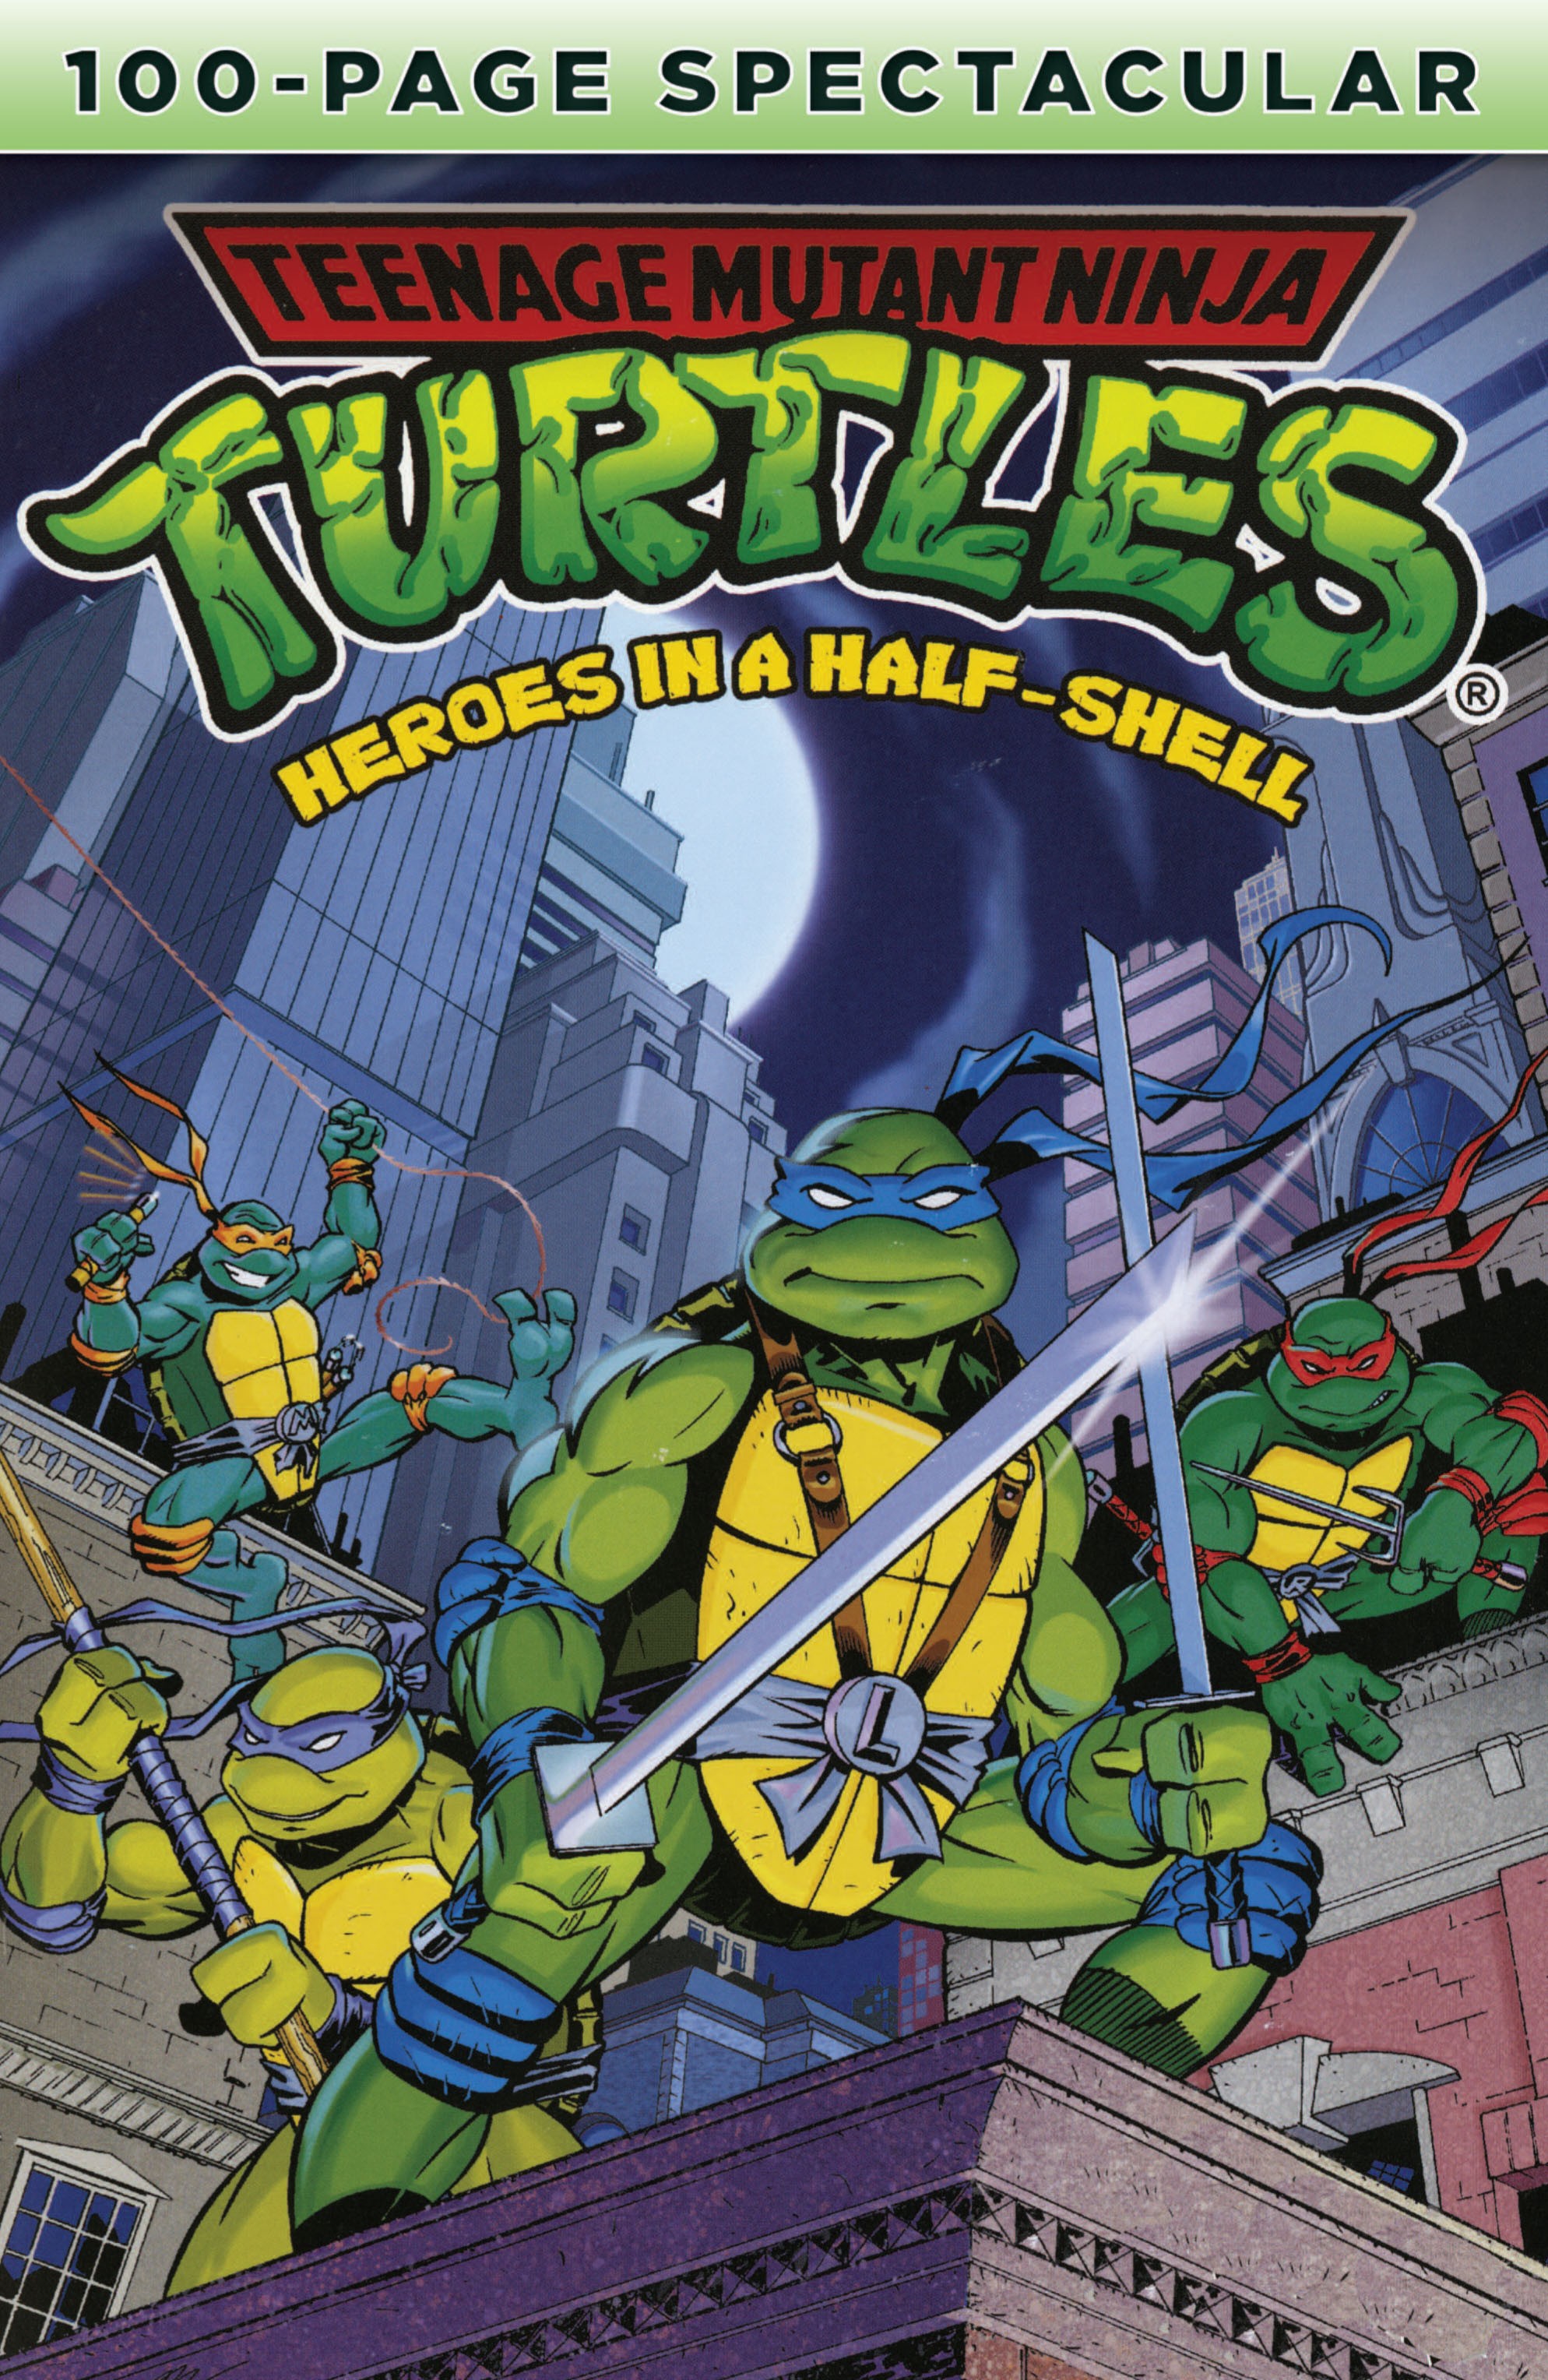 Read online Teenage Mutant Ninja Turtles 100-Page Spectacular comic -  Issue # TPB - 1